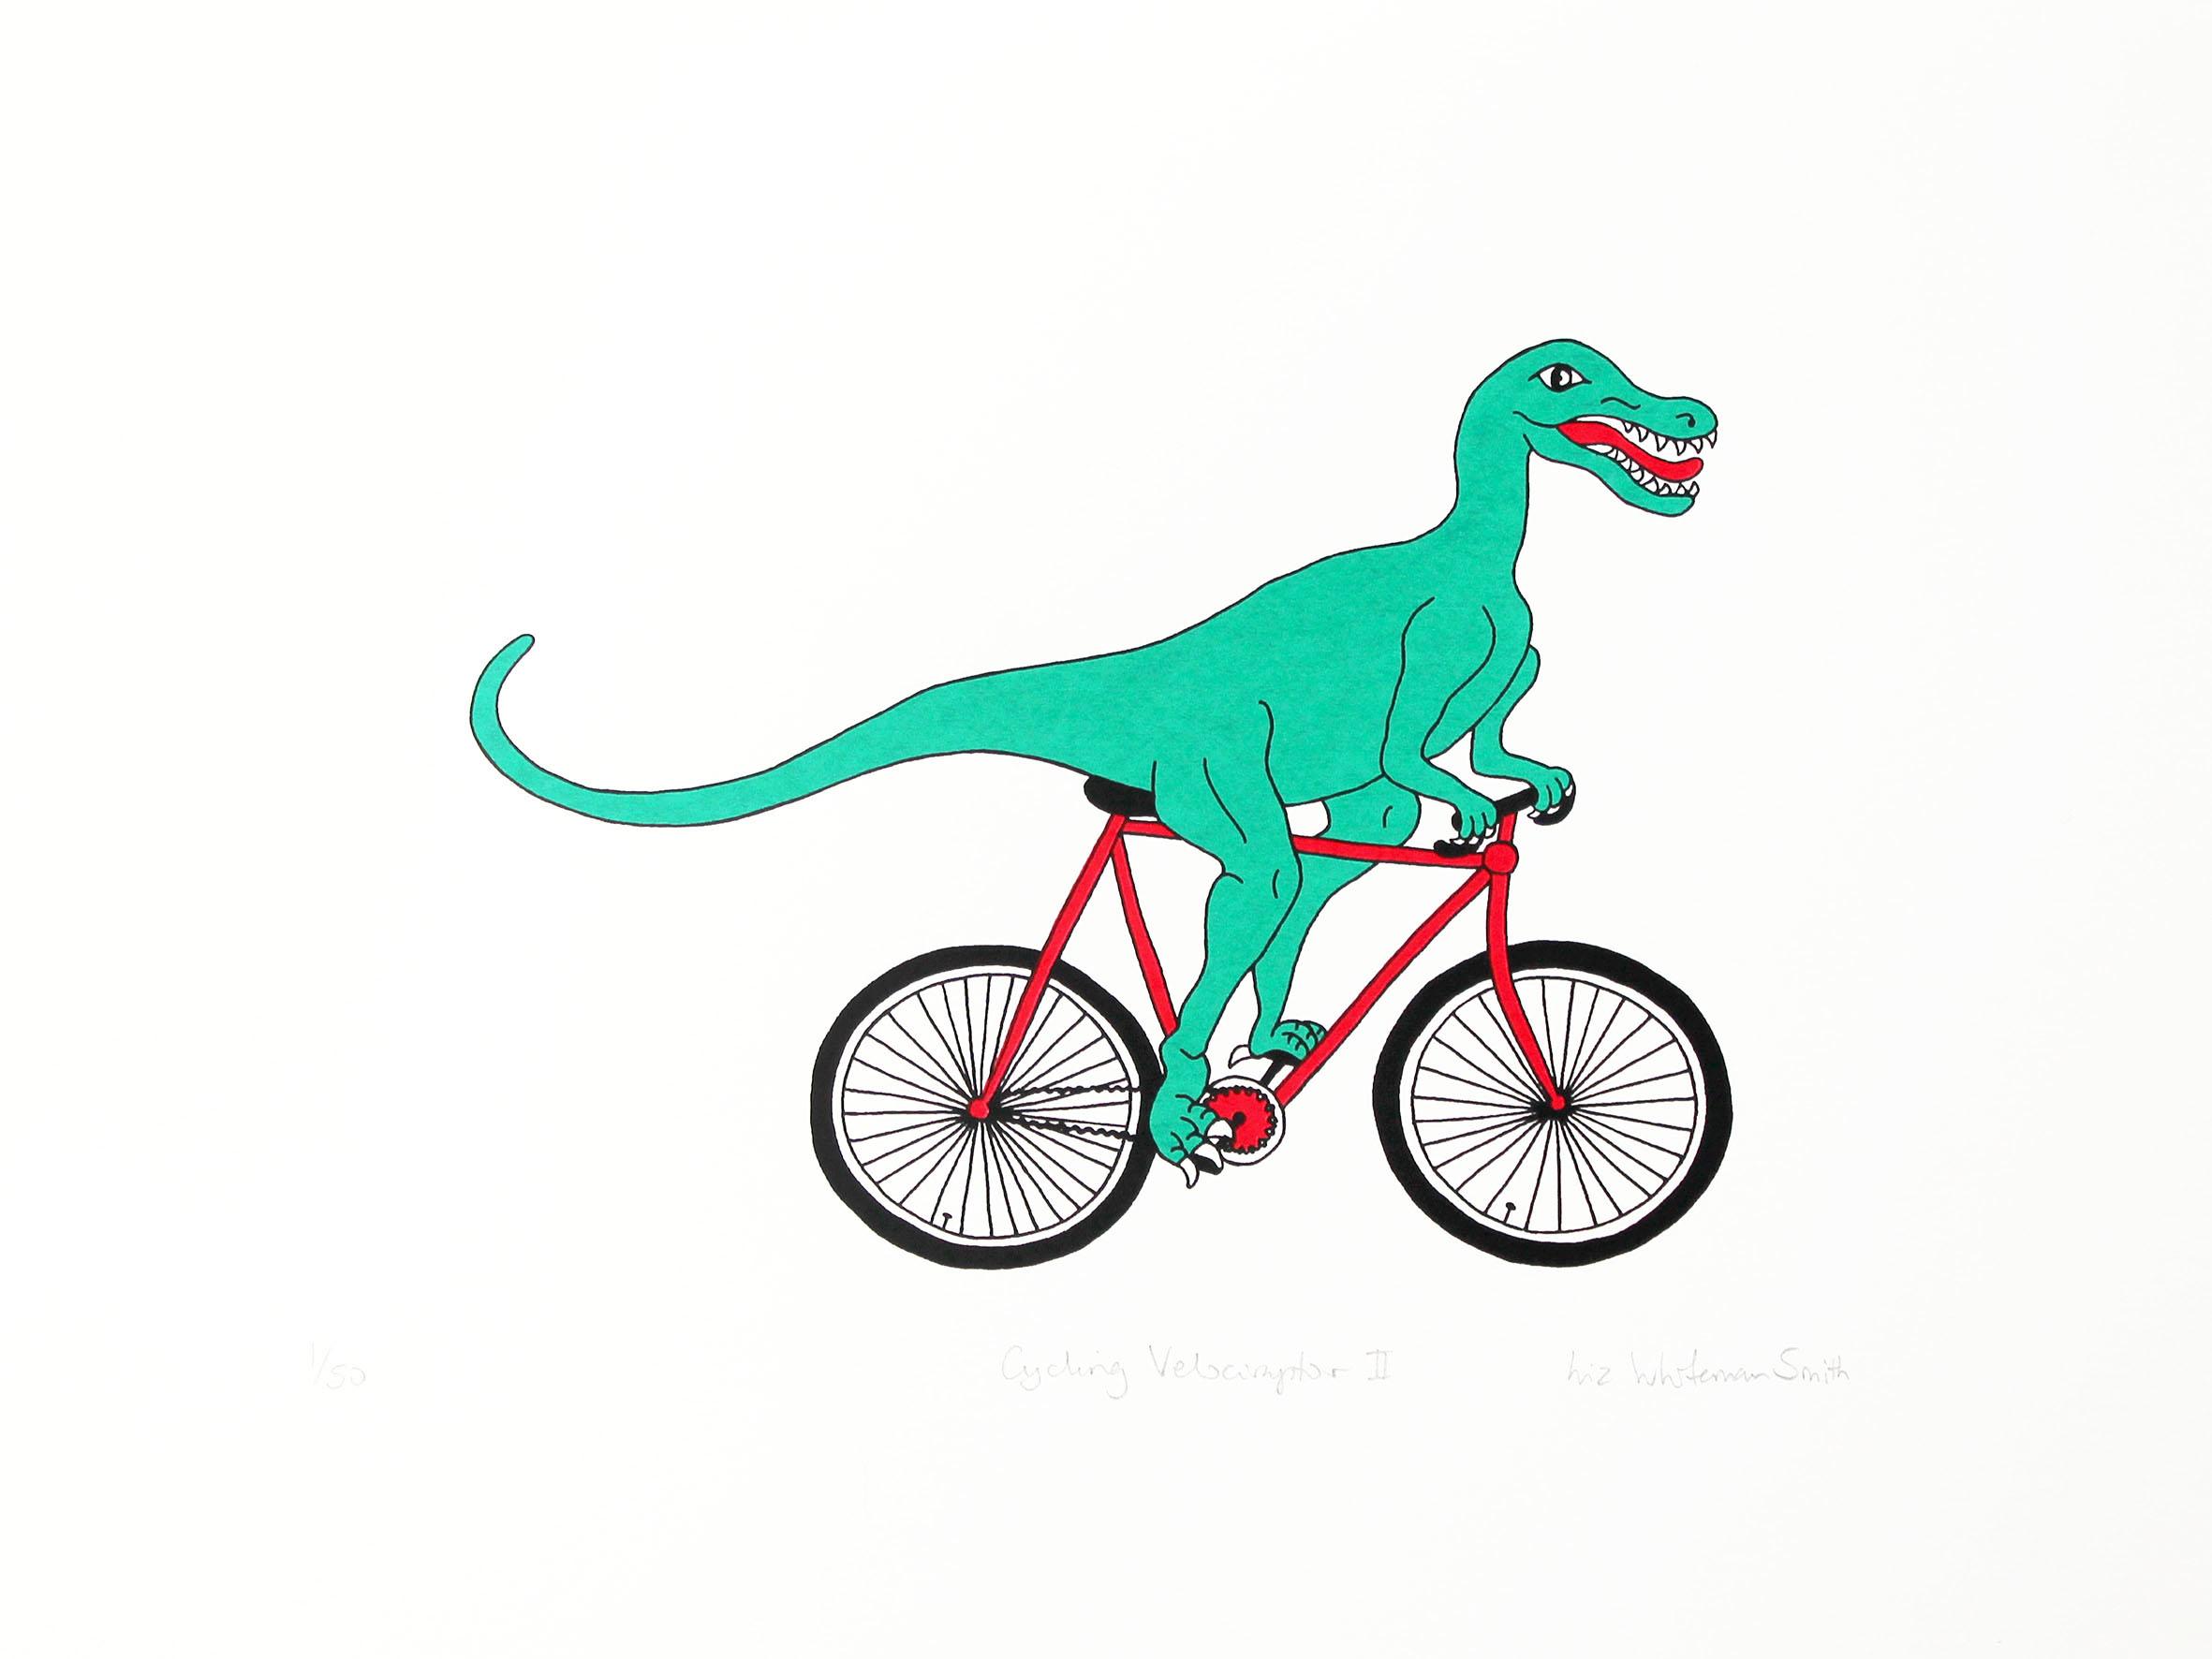 Cycling velociraptor II